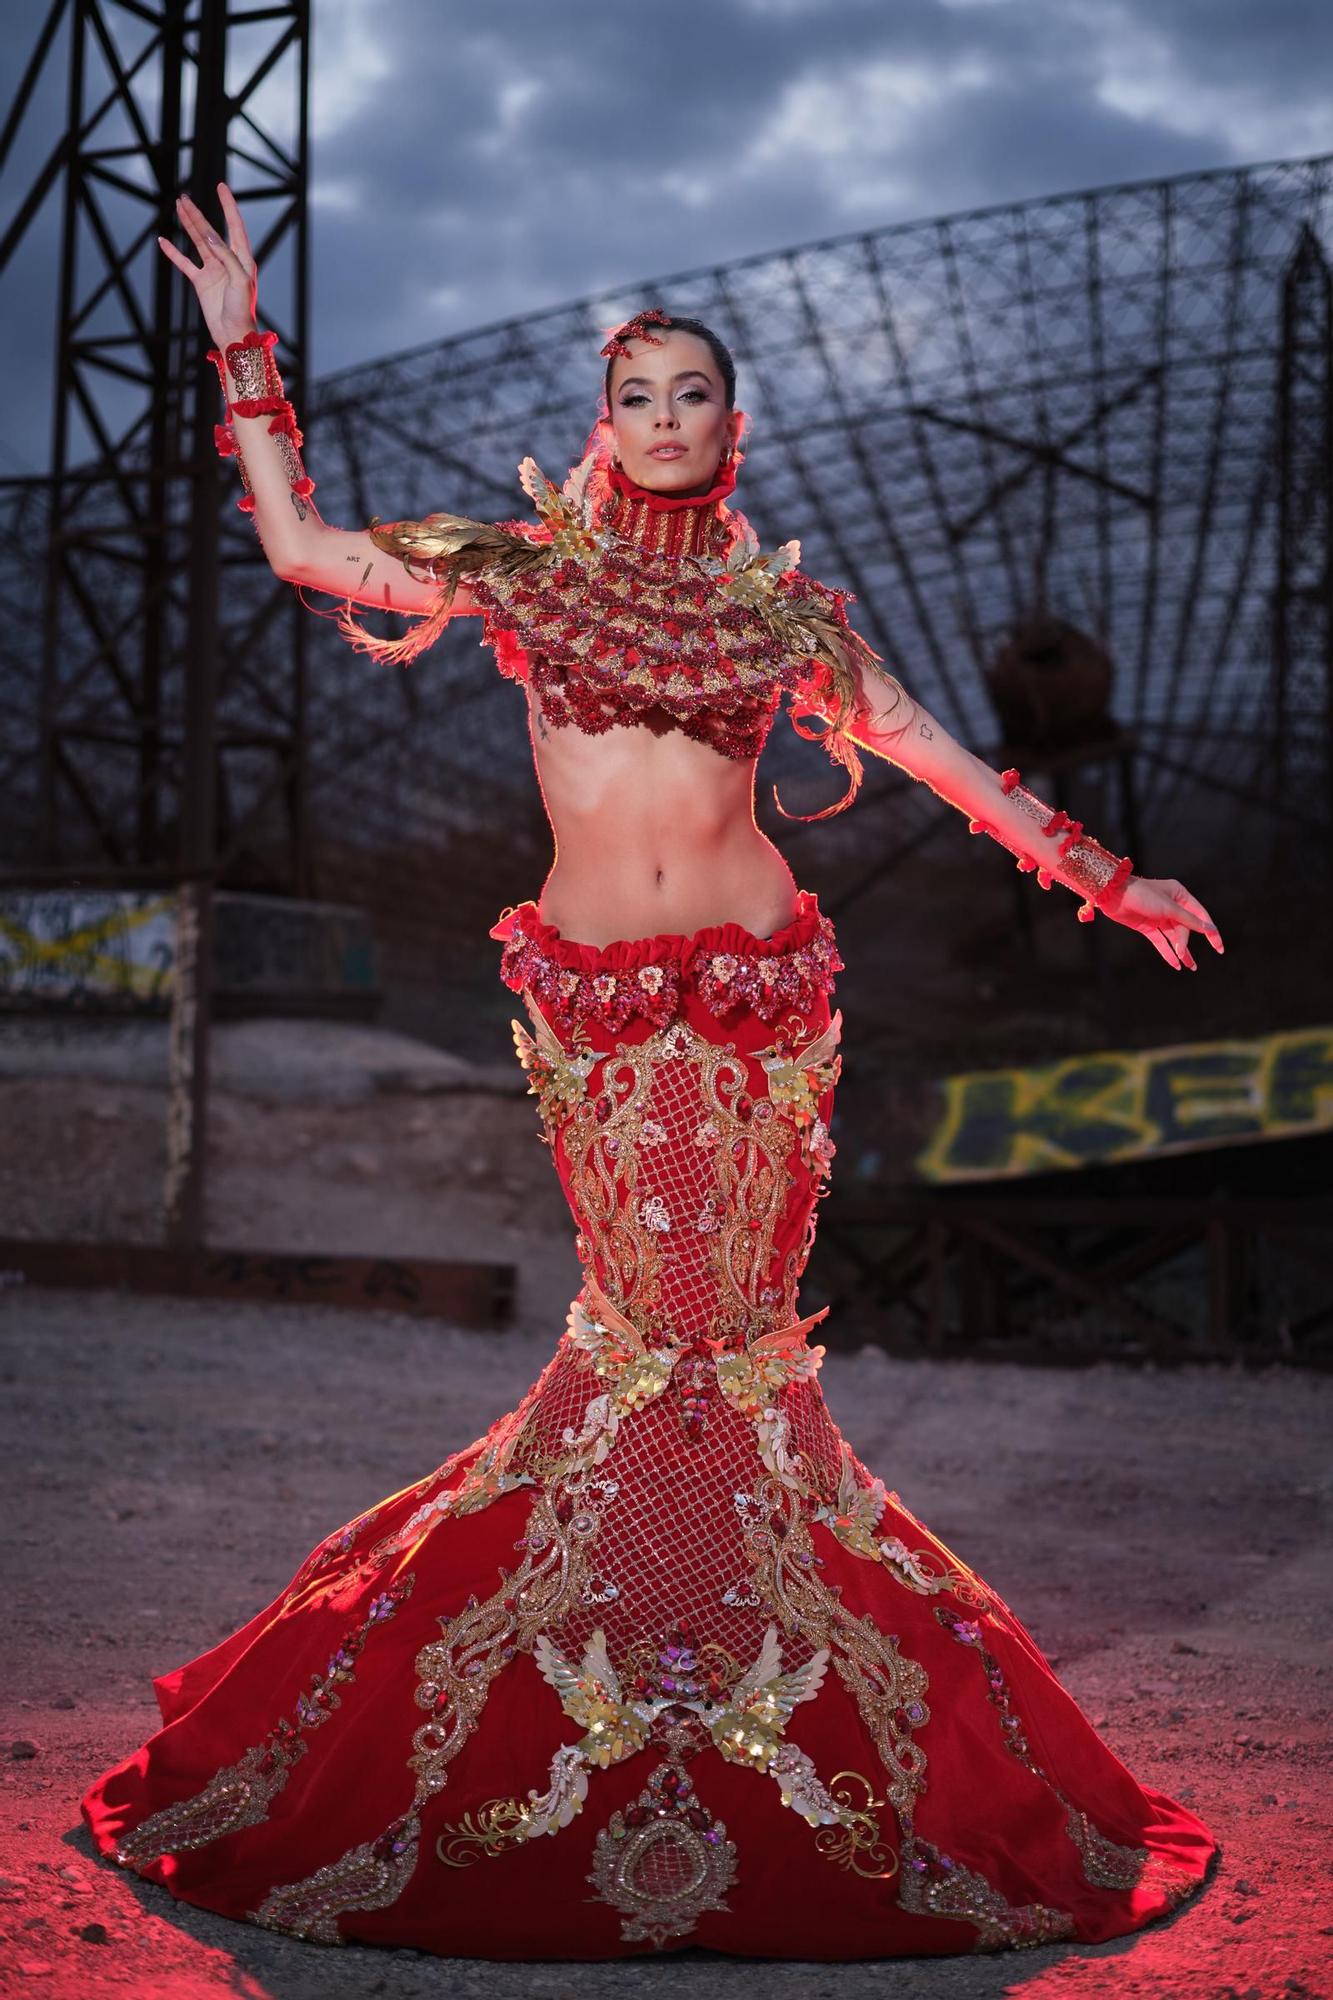 Así se convirtió Ruth González en Reina del Carnaval de Santa Cruz de Tenerife